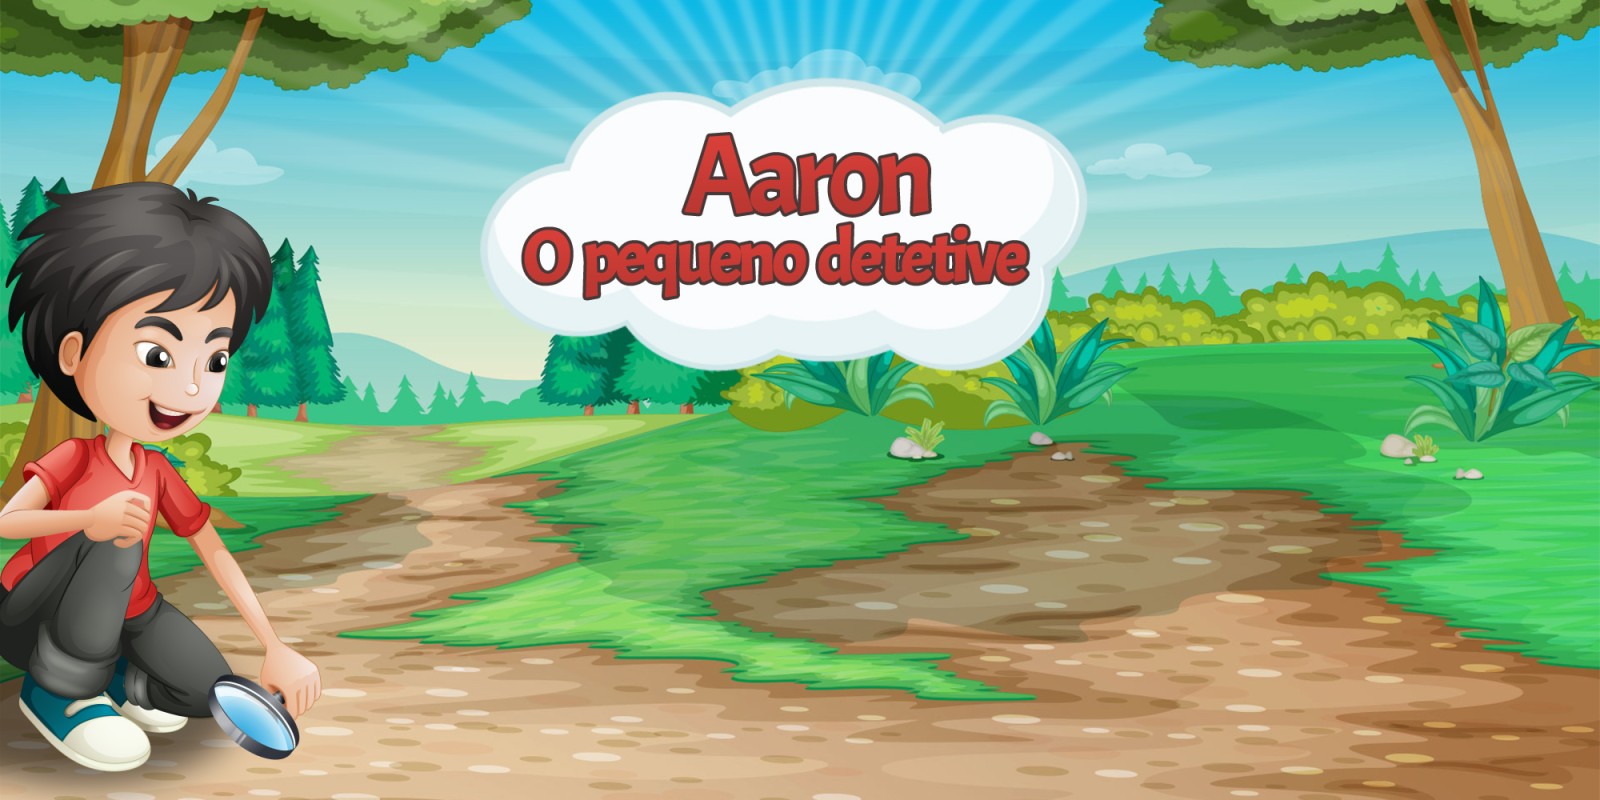 Aaron - O pequeno detetive